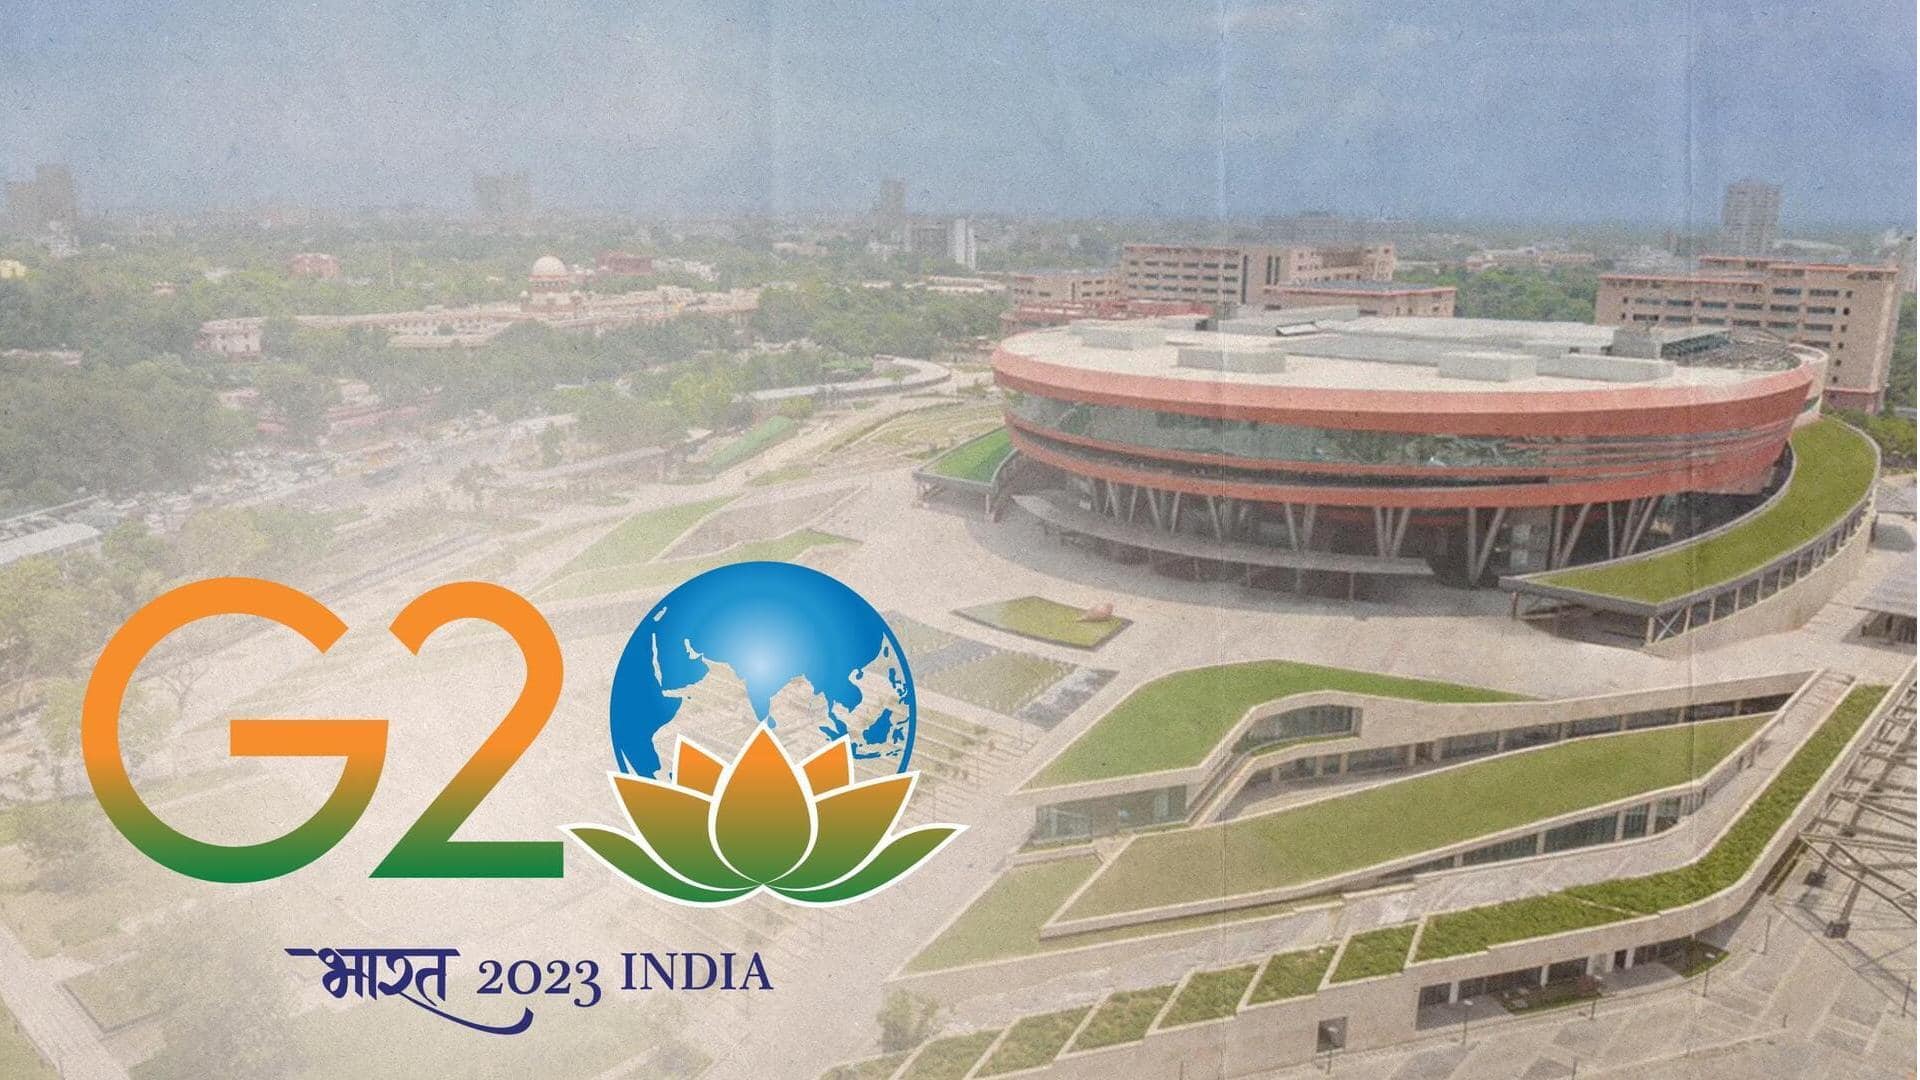 G20 Summit Full schedule of highprofile twoday meet in Delhi